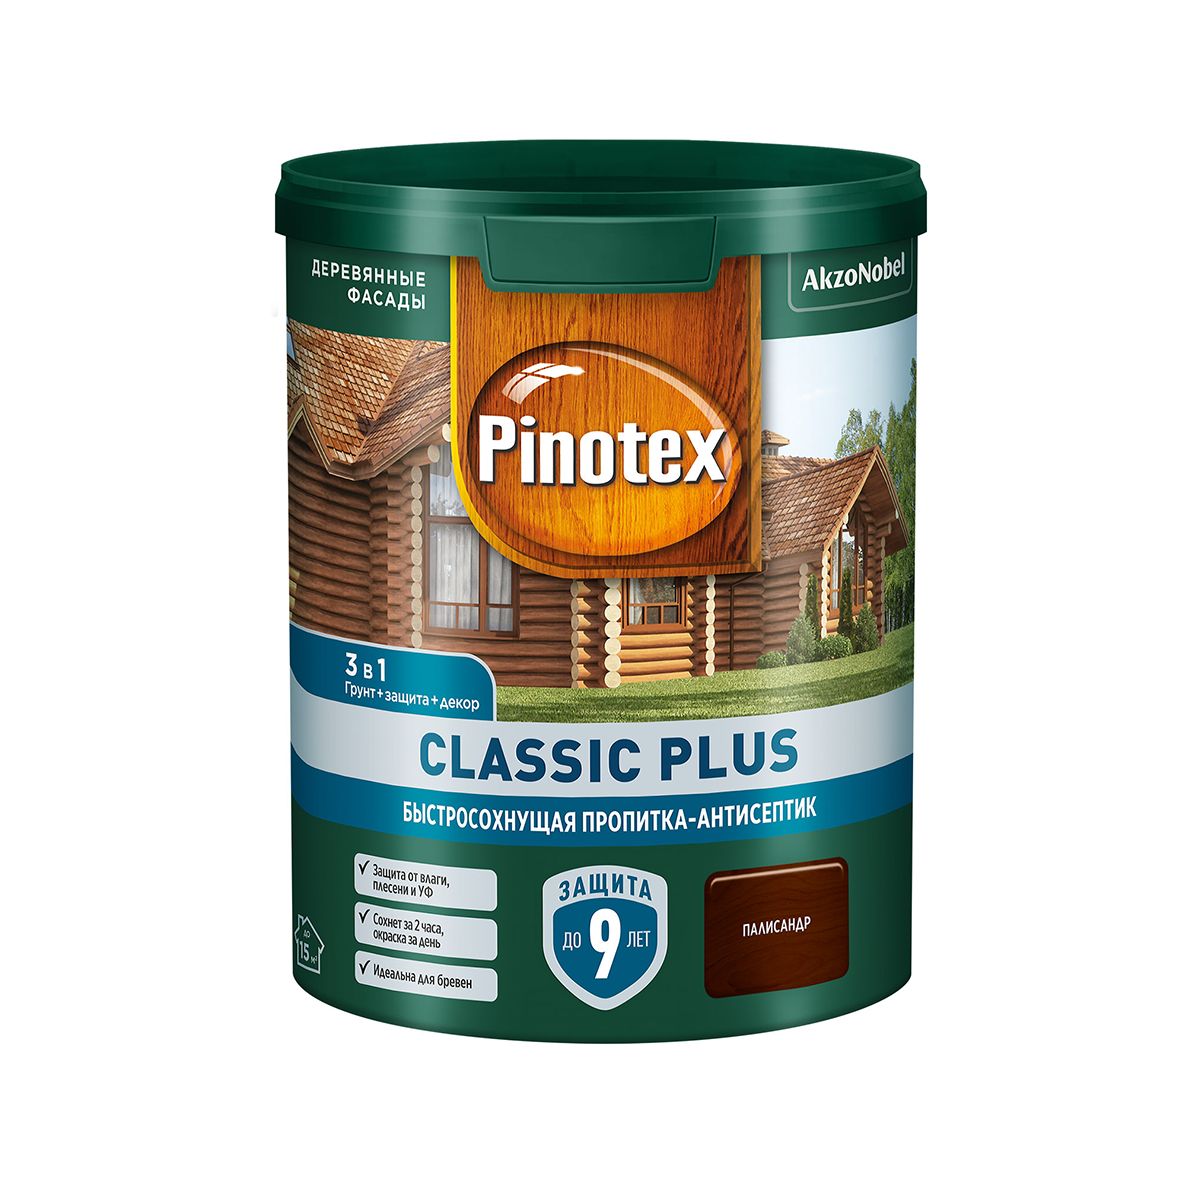 Пропитка-антисептик Pinotex Classic Plus 3 в 1,быстросохнущая, палисандр, 900 мл